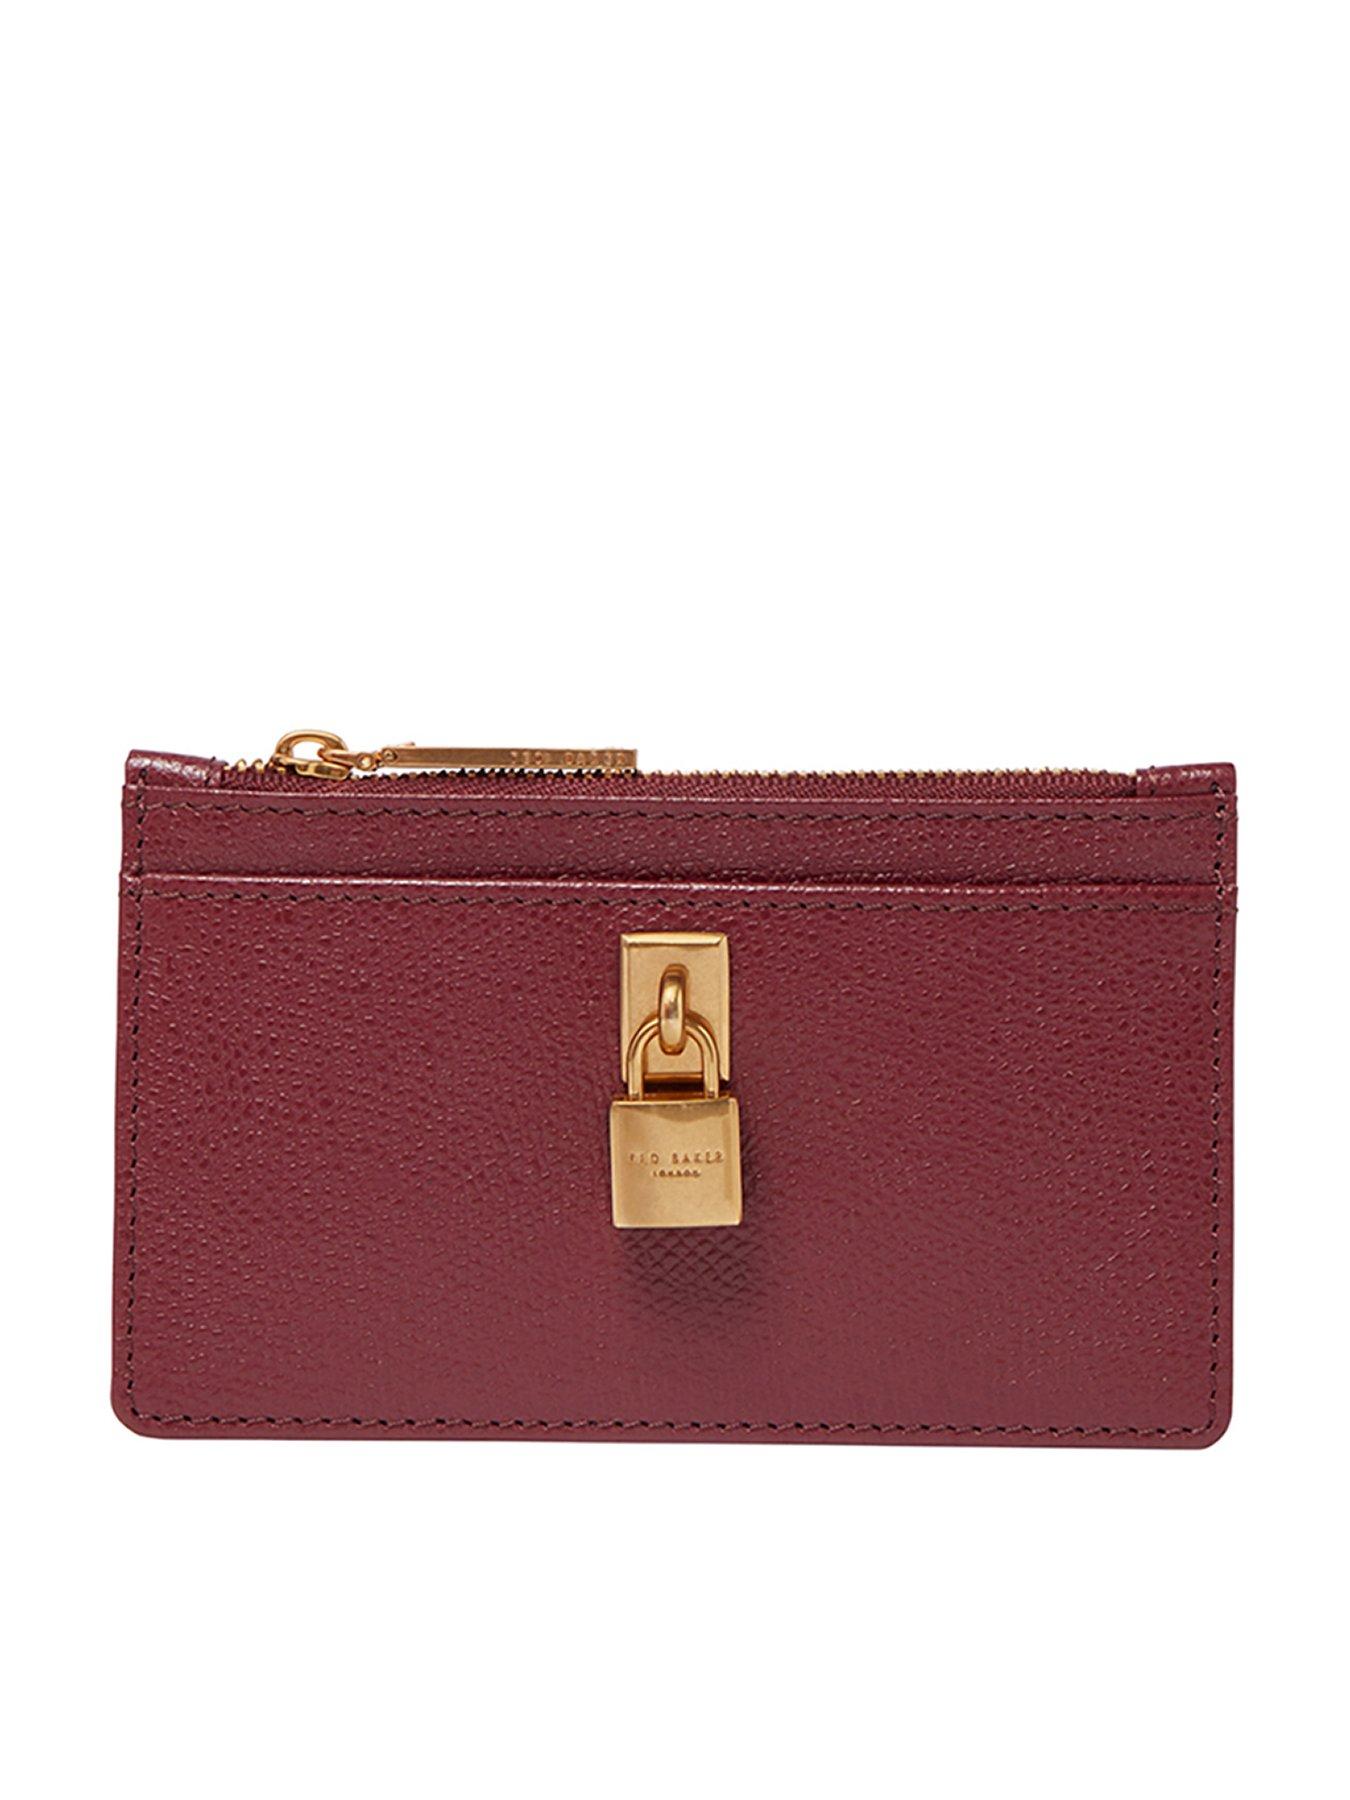 TED BAKER mini purse -153245 / WXL-MACIEY-XH9W / PL pink : Amazon.ae:  Fashion